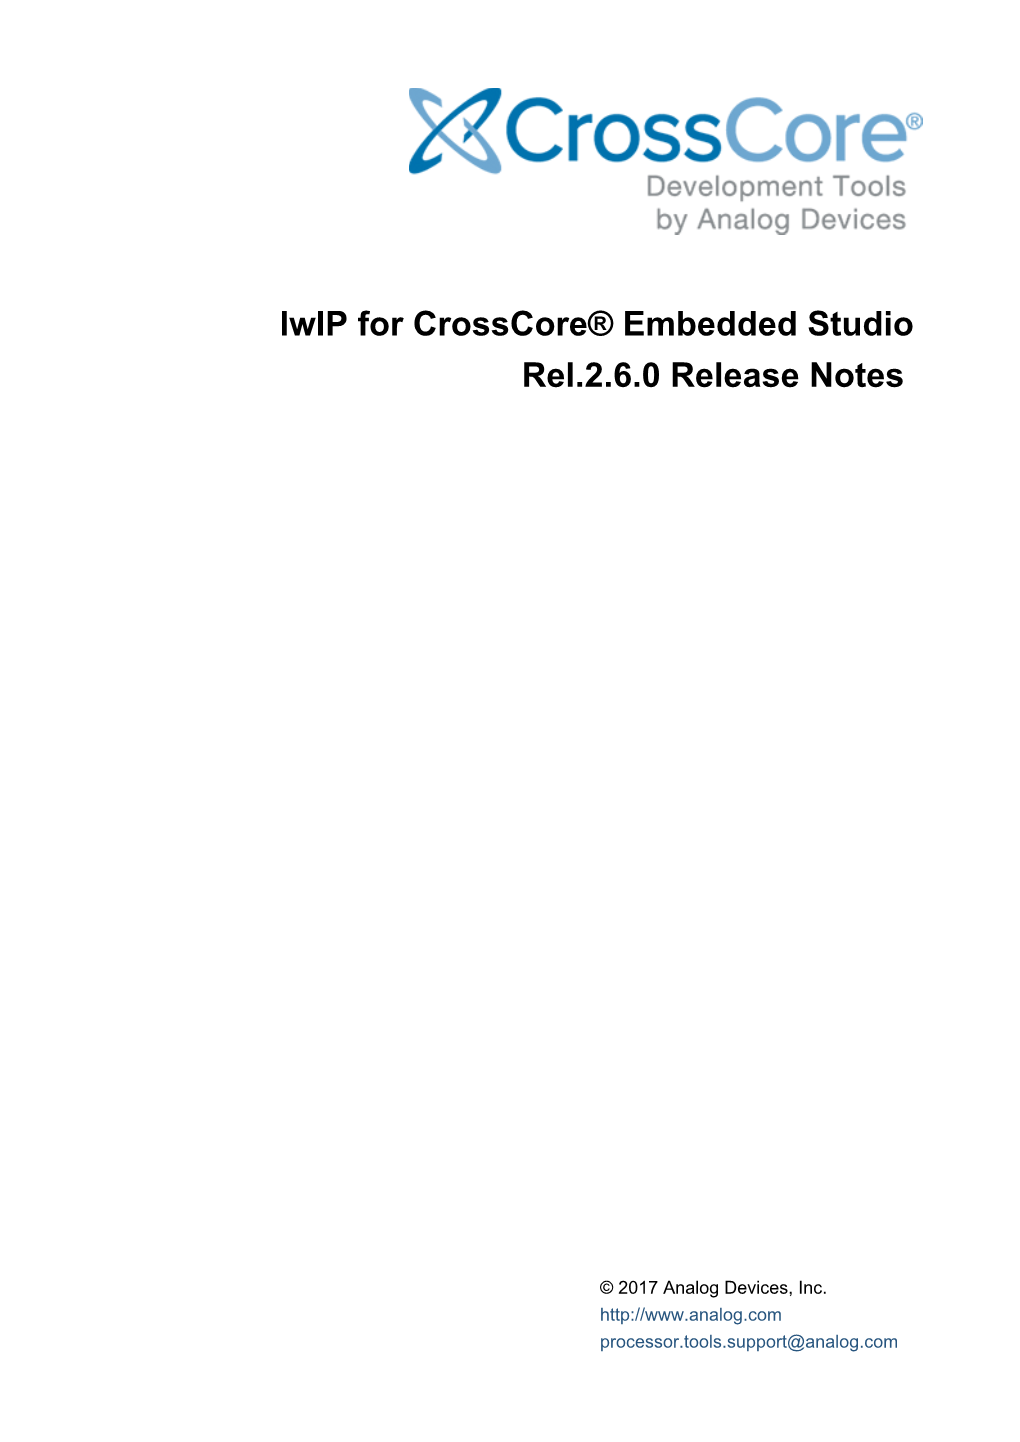 Lwip for Crosscore® Embedded Studio Rel.2.6.0 Release Notes